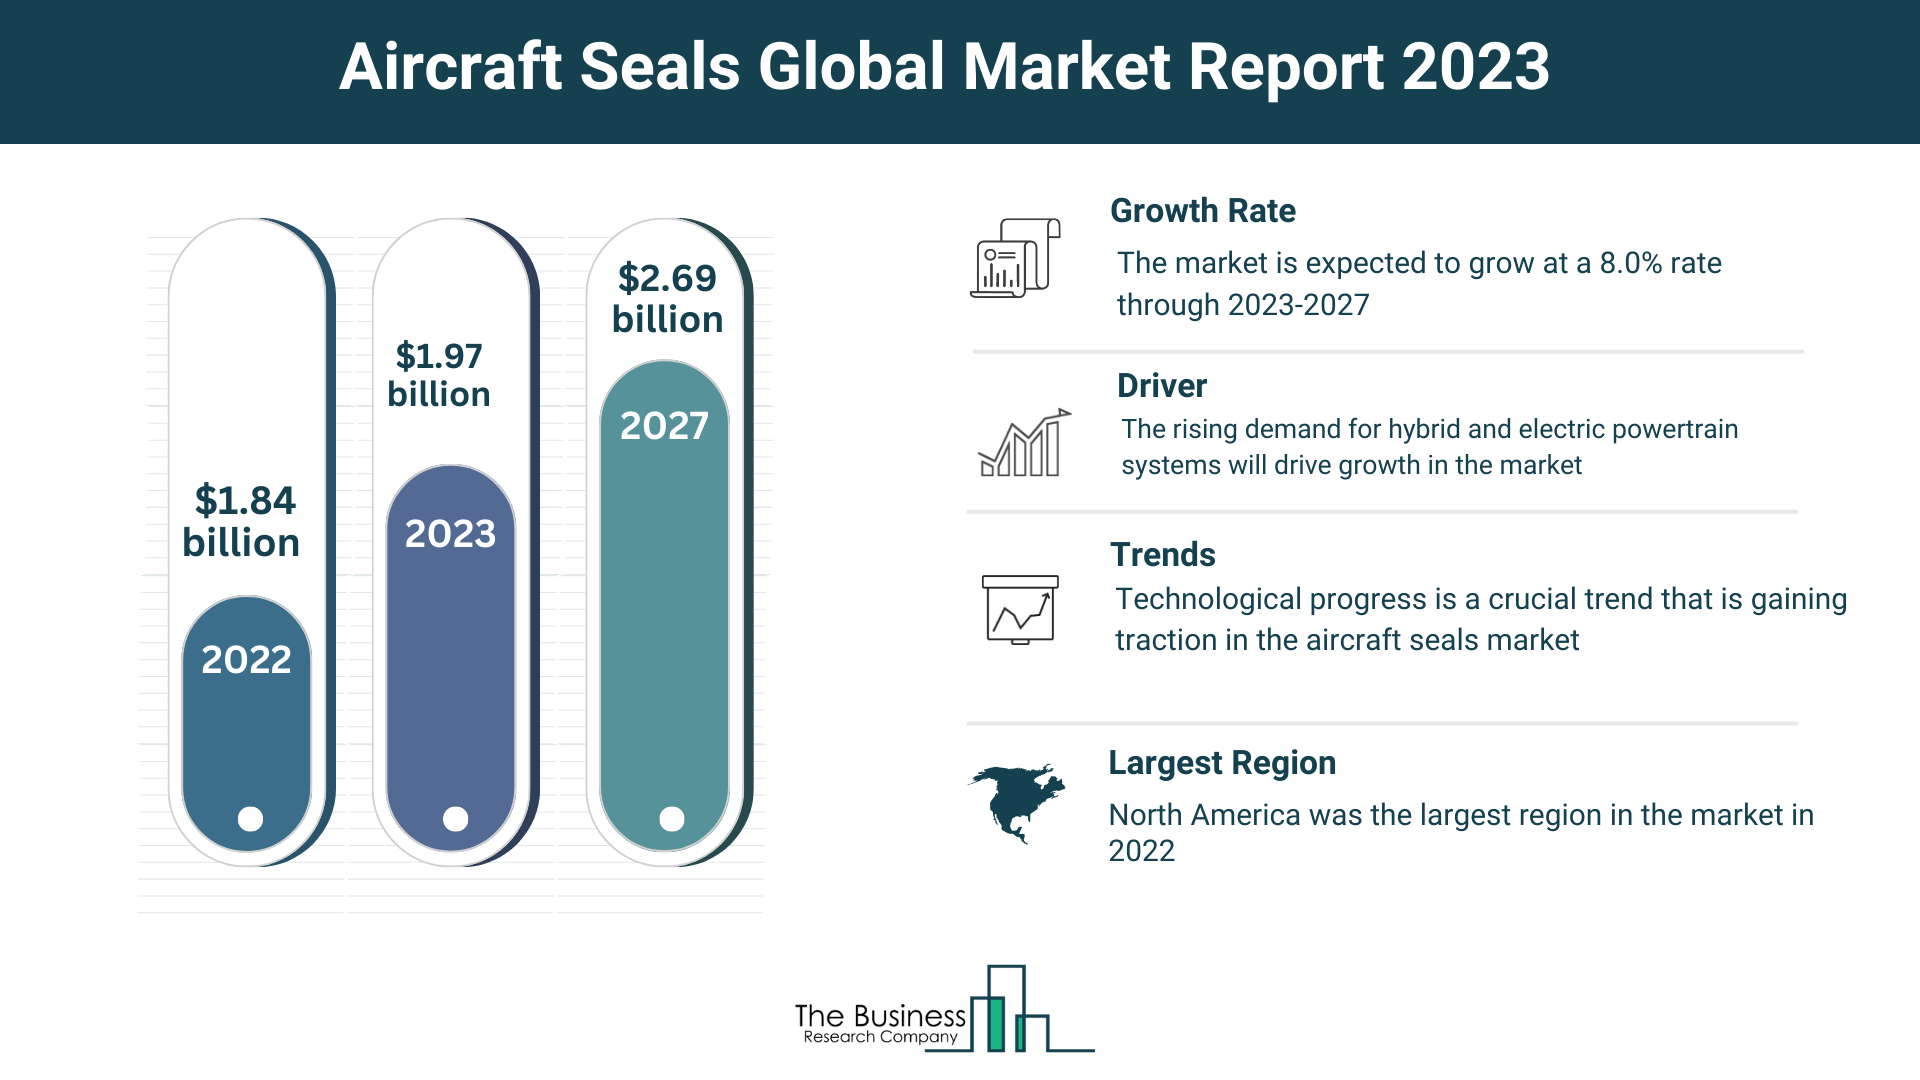 Global Aircraft Seals Market